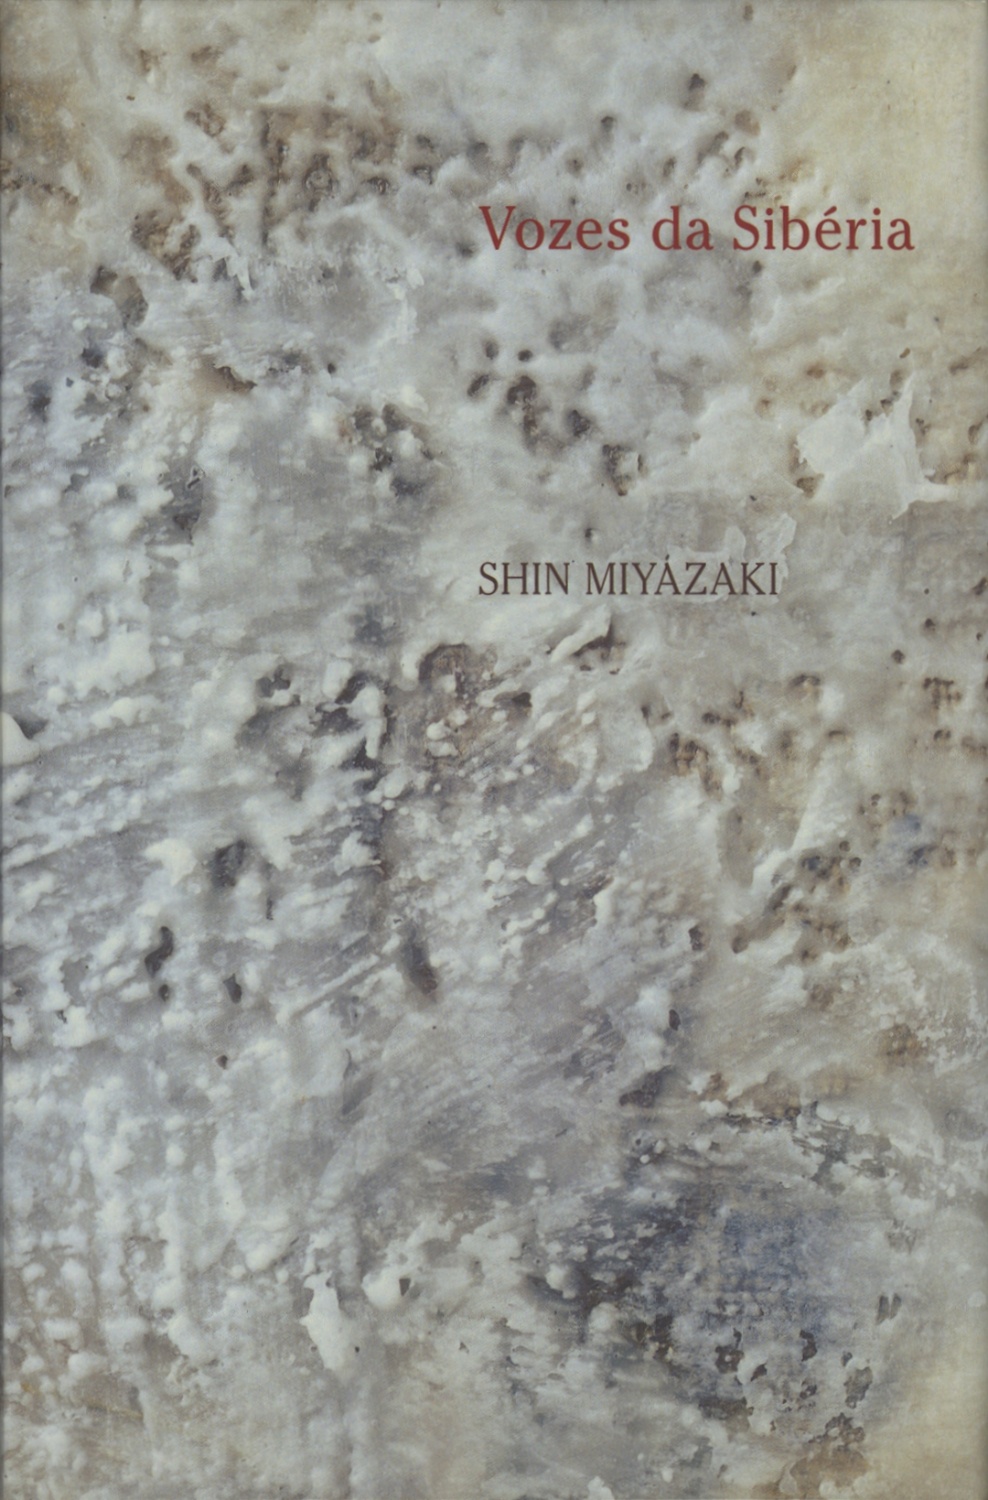 Vozes da Sibéria / Voice of Shiberia　SHIN MIYAZAKI／XXVI Bienal Internacional de Sao Paulo 2004 Japao